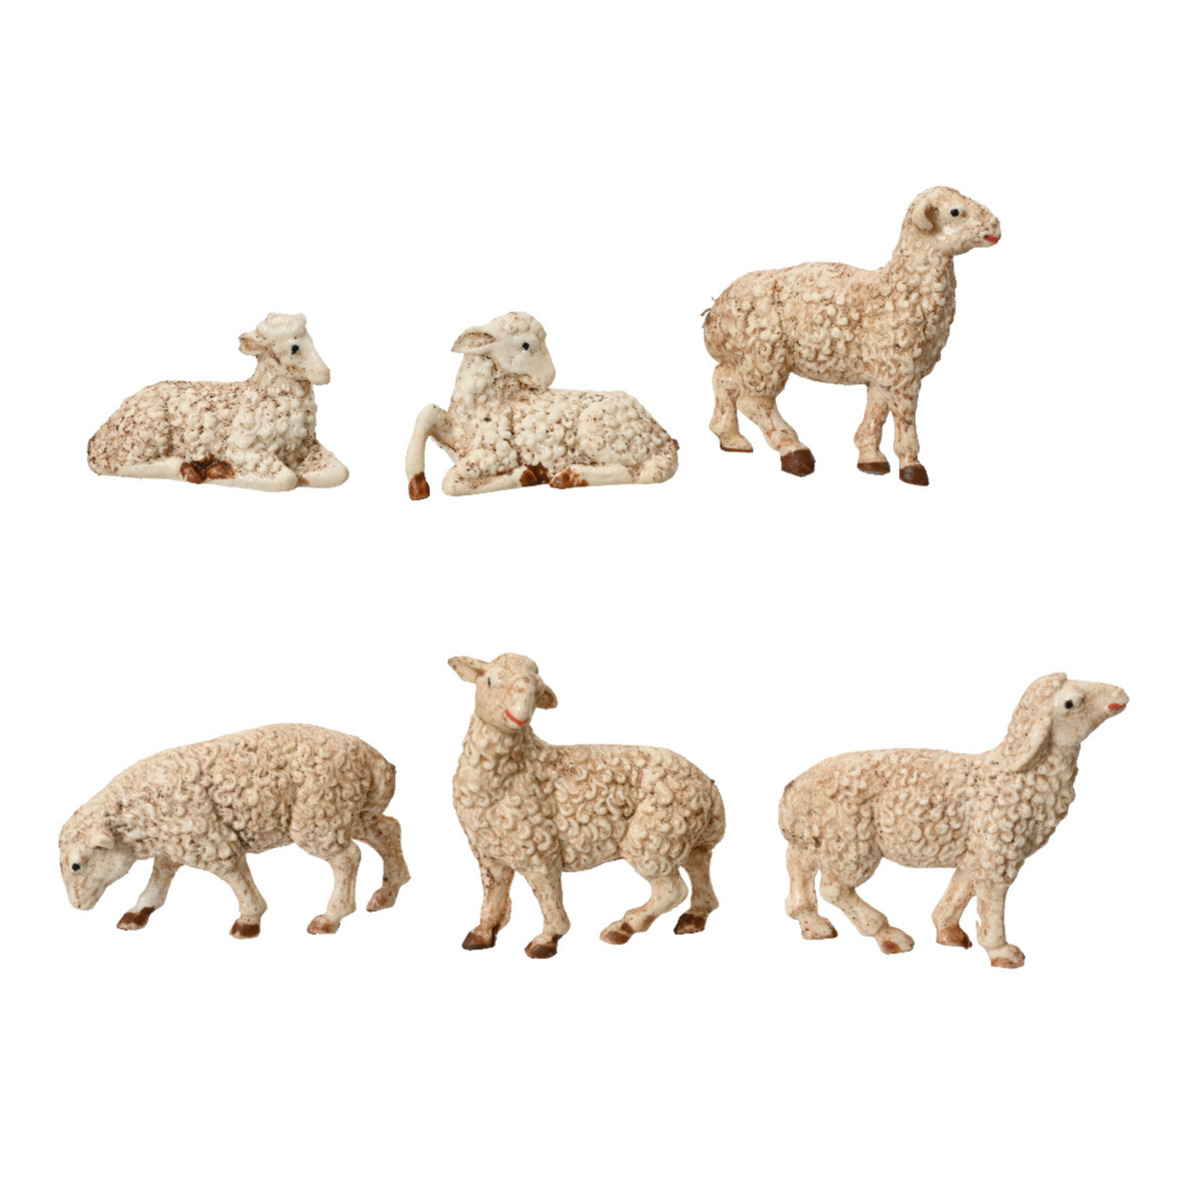 Decoris schapenbeeldjes - 6x stuks - 12 cm - mdf hout